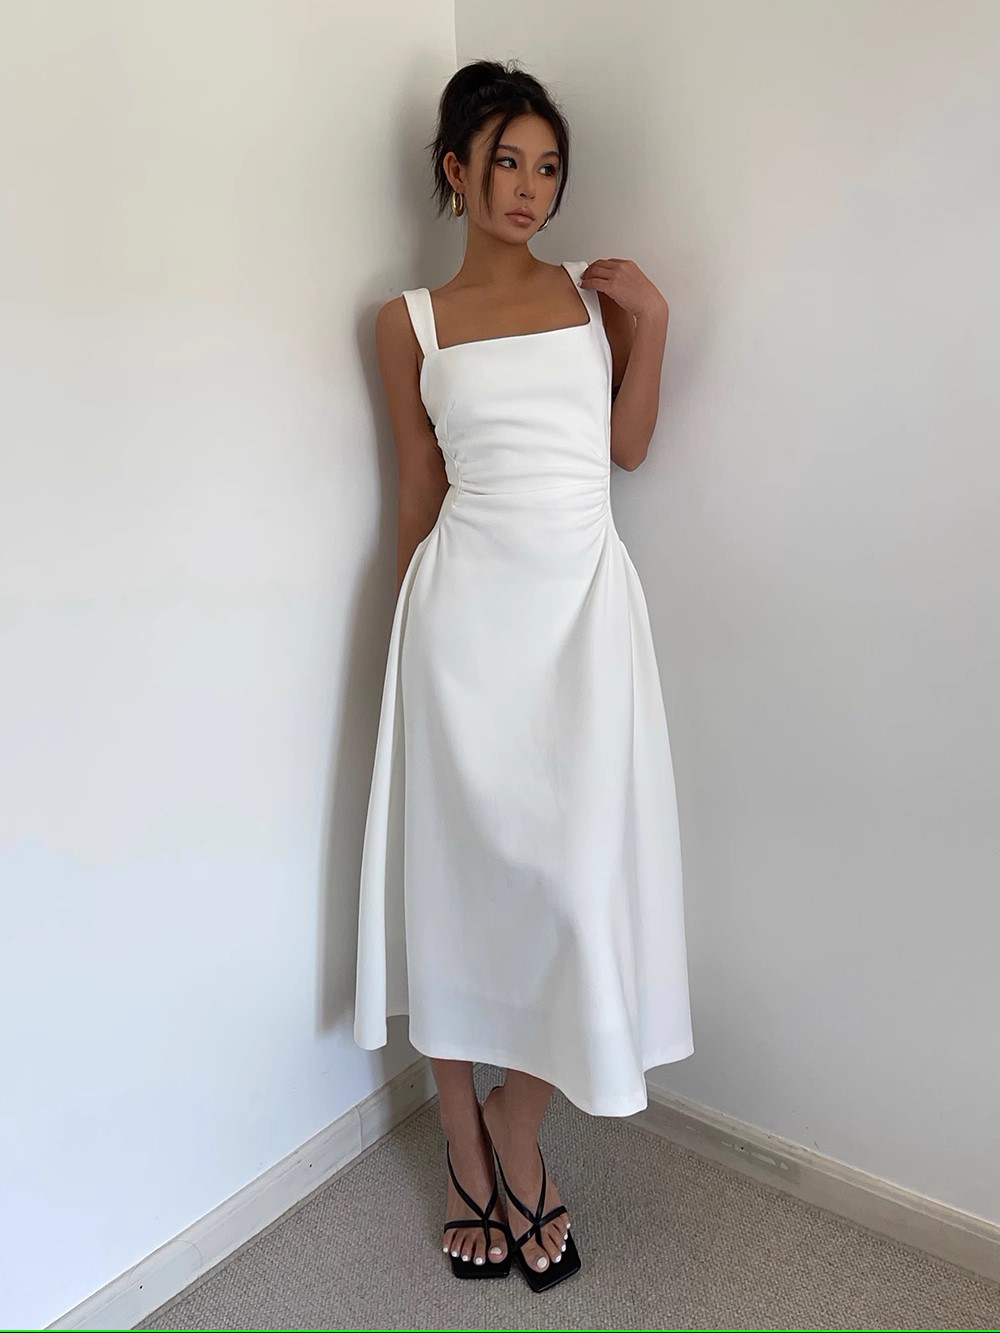 Homemade White Backless Halter Dress Prom Party Dress